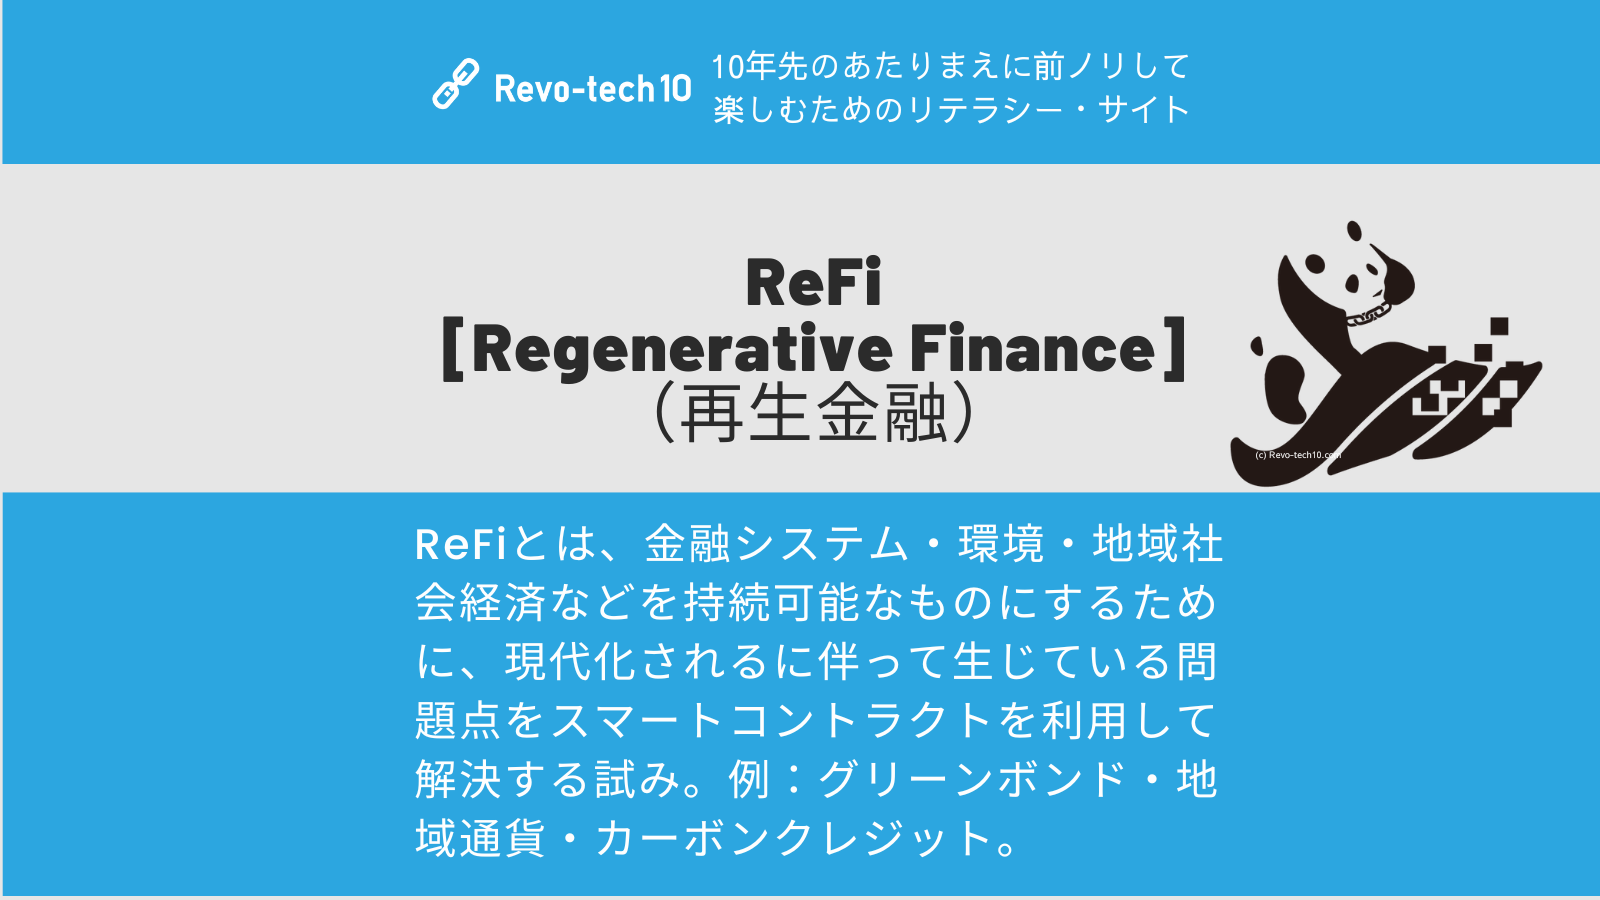 0079_ReFi [Regenerative Finance] （再生金融）とは、金融システム・環境・地域社会経済などを持続可能なものにするために、現代化されるに伴って生じている問題点をスマートコントラクトを利用して解決する試み。例：グリーンボンド・地域通貨・カーボンクレジット。